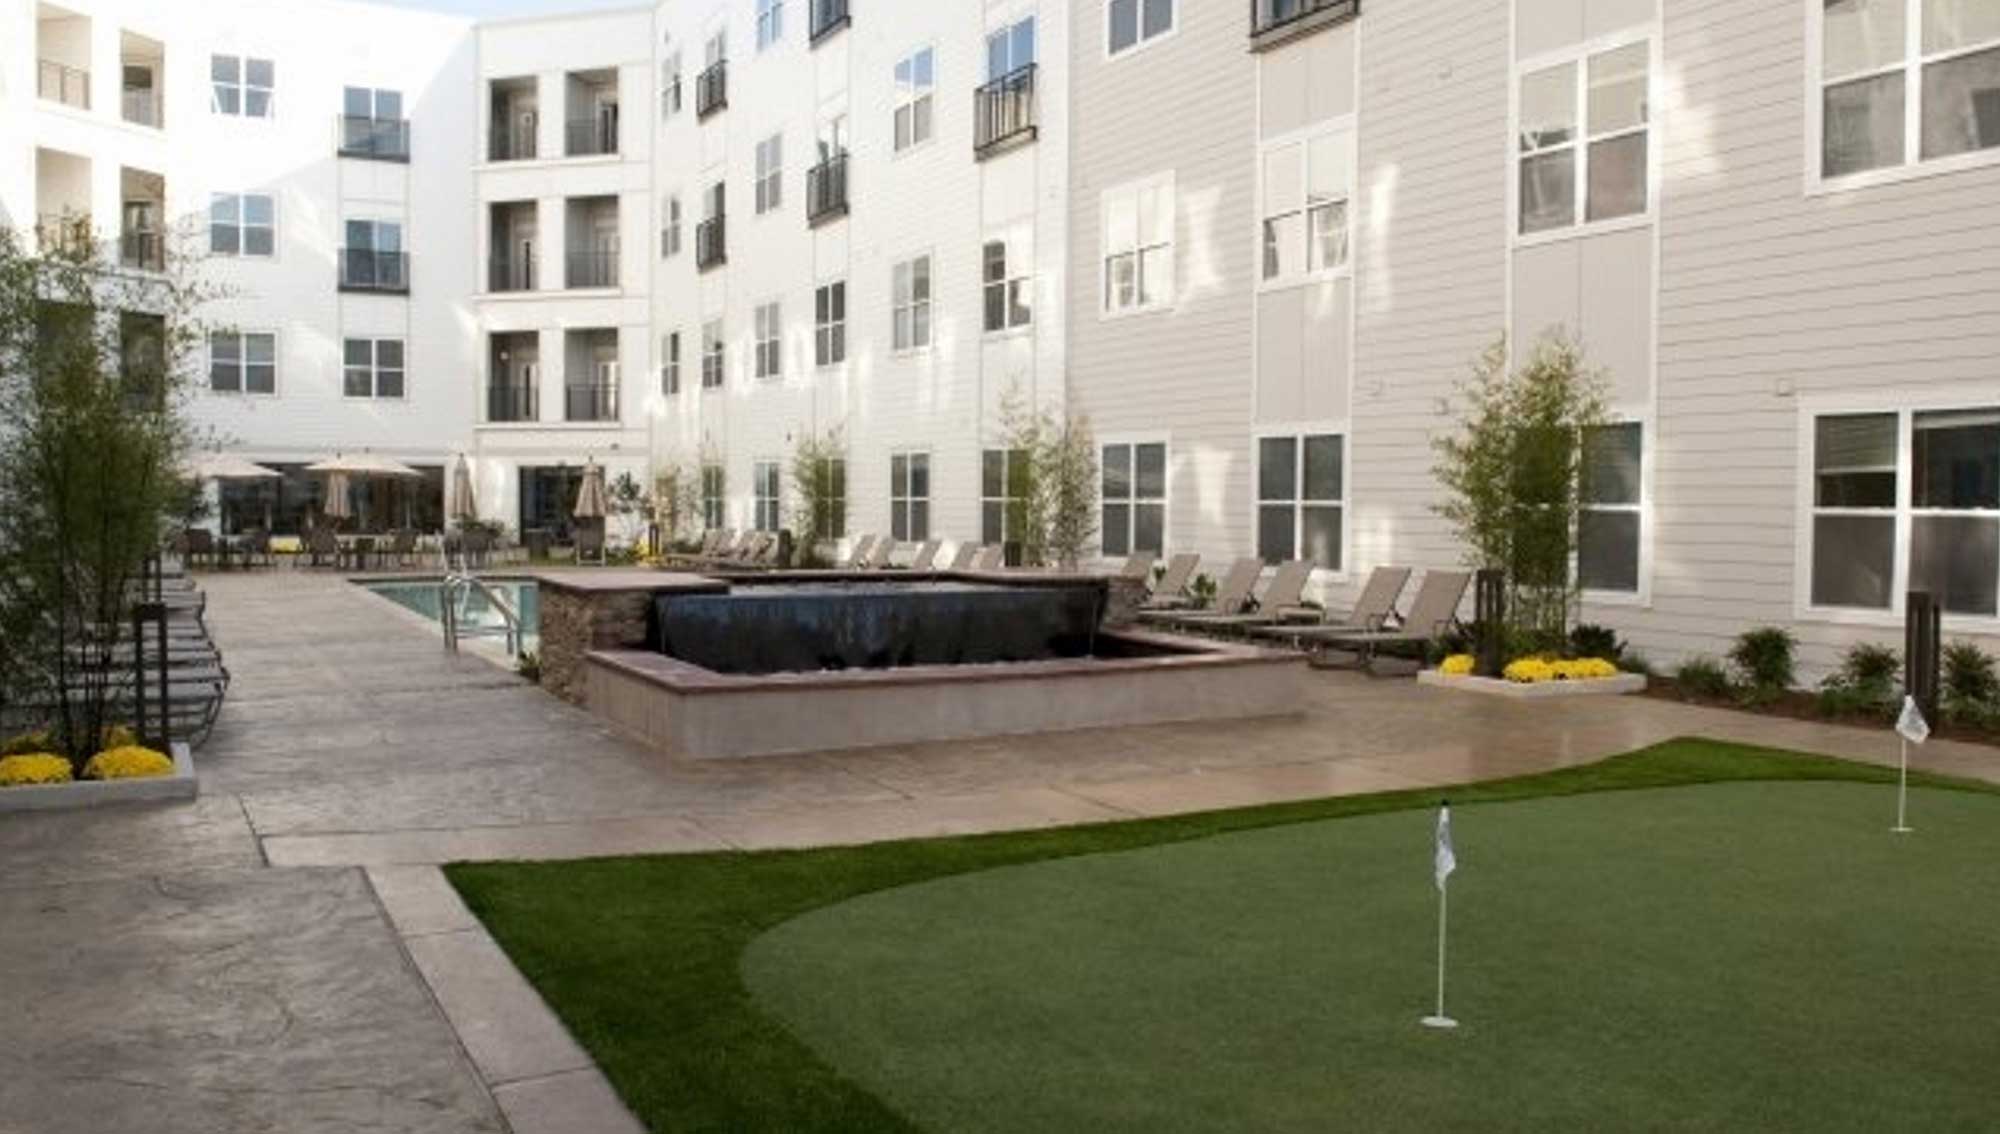 201 Twenty One Apartments courtyard